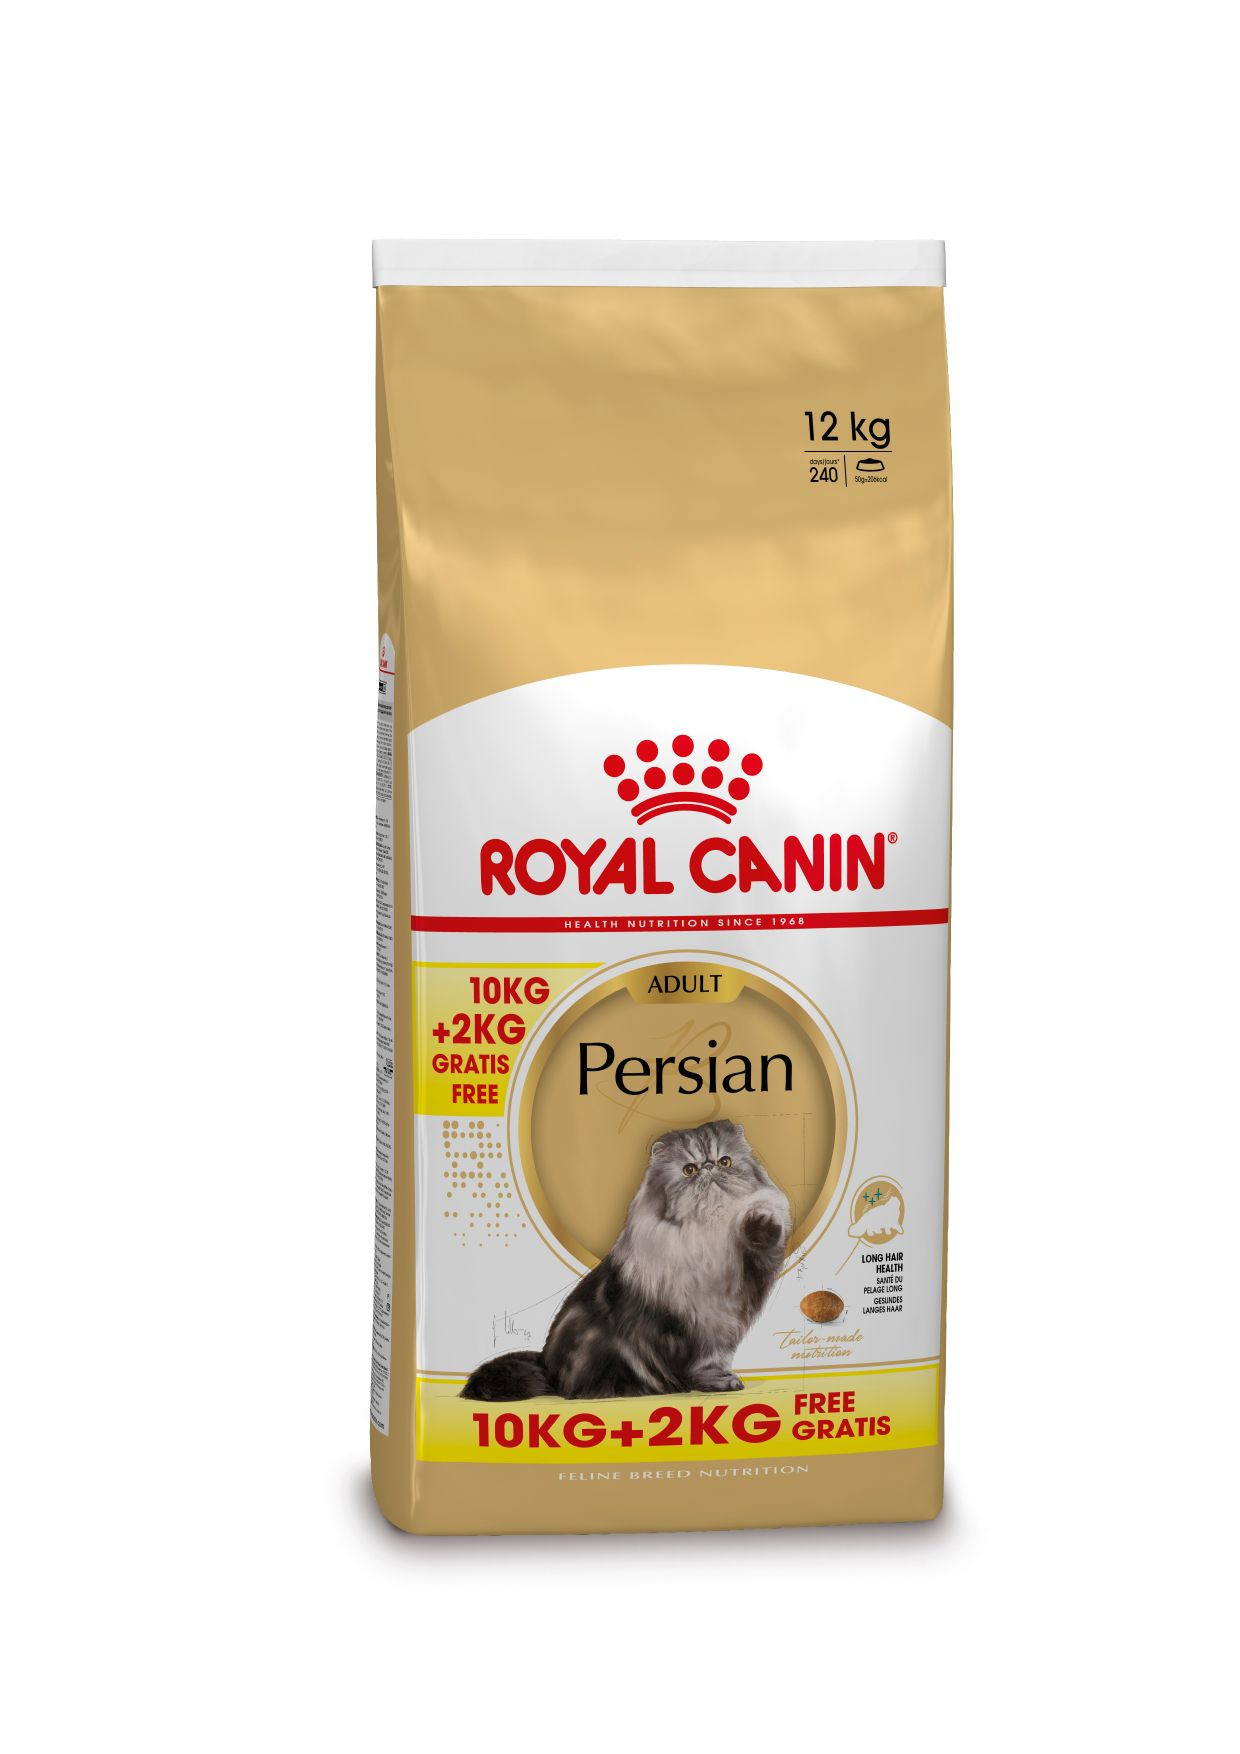 Royal Canin Adult Perserkatze Katzenfutter